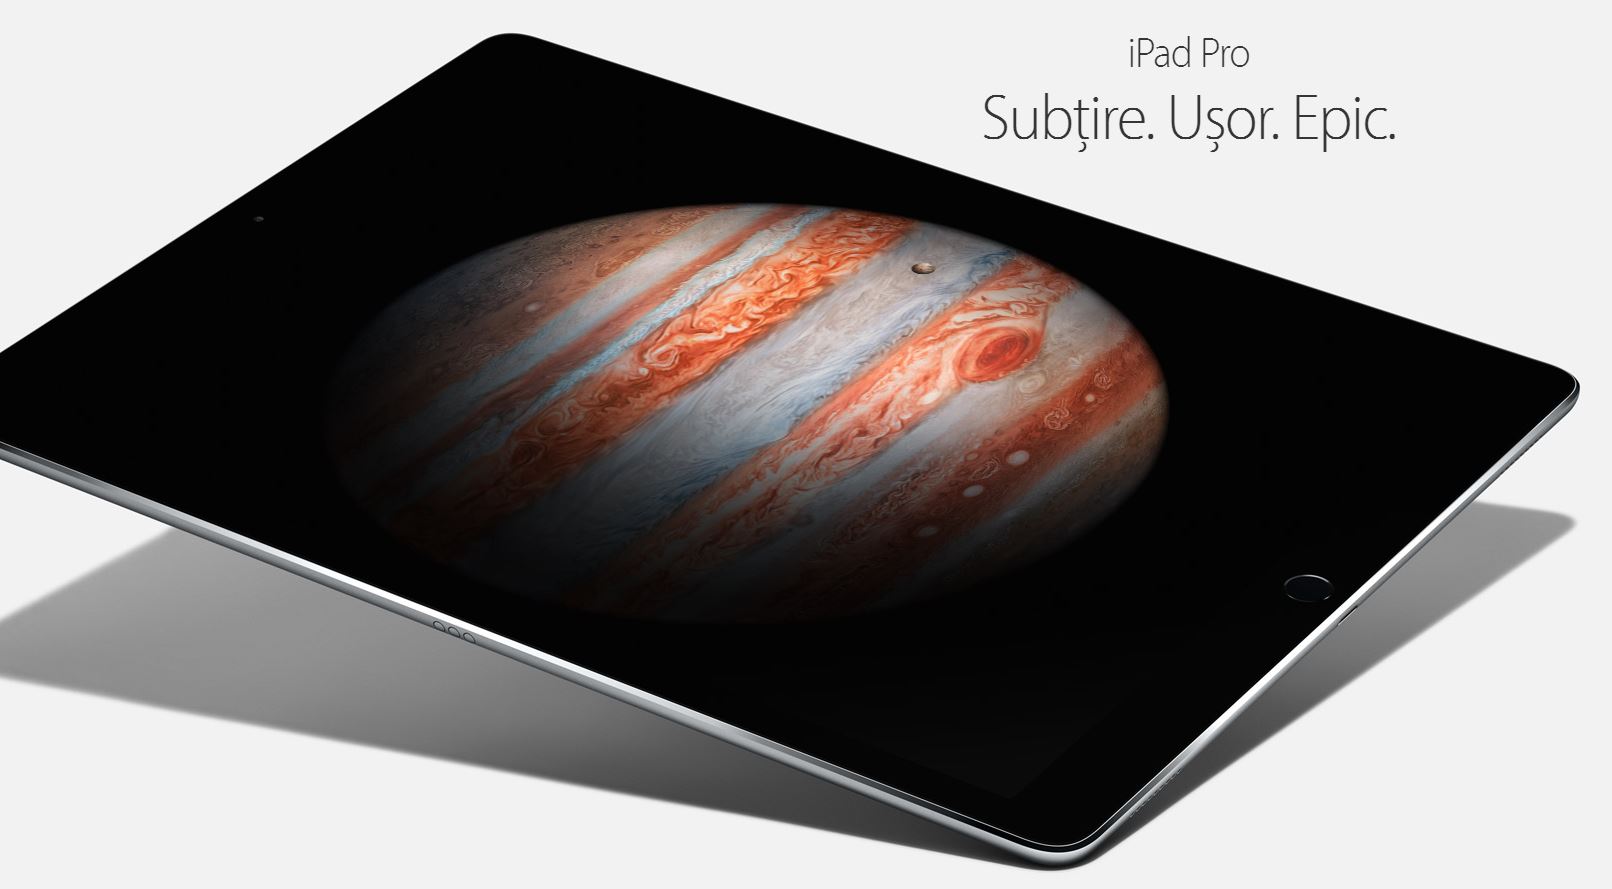 iPad Pro 9.7 Zoll guter Bildschirm